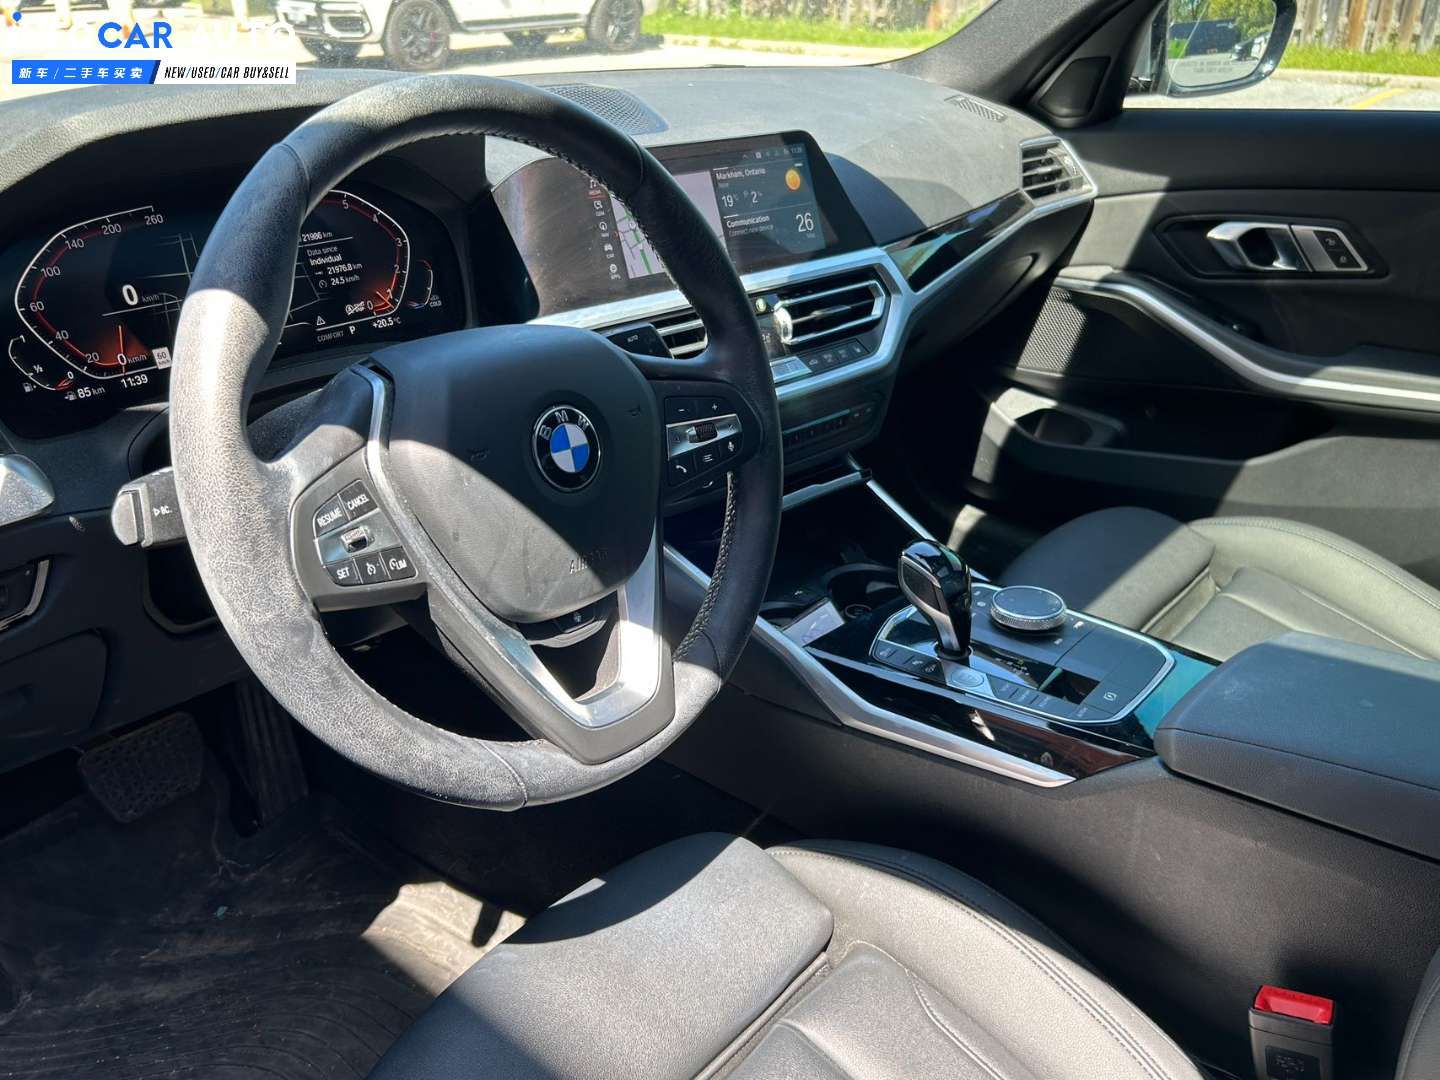 2019 BMW 3-Series 330i - INFOCAR - Toronto Auto Trading Platform